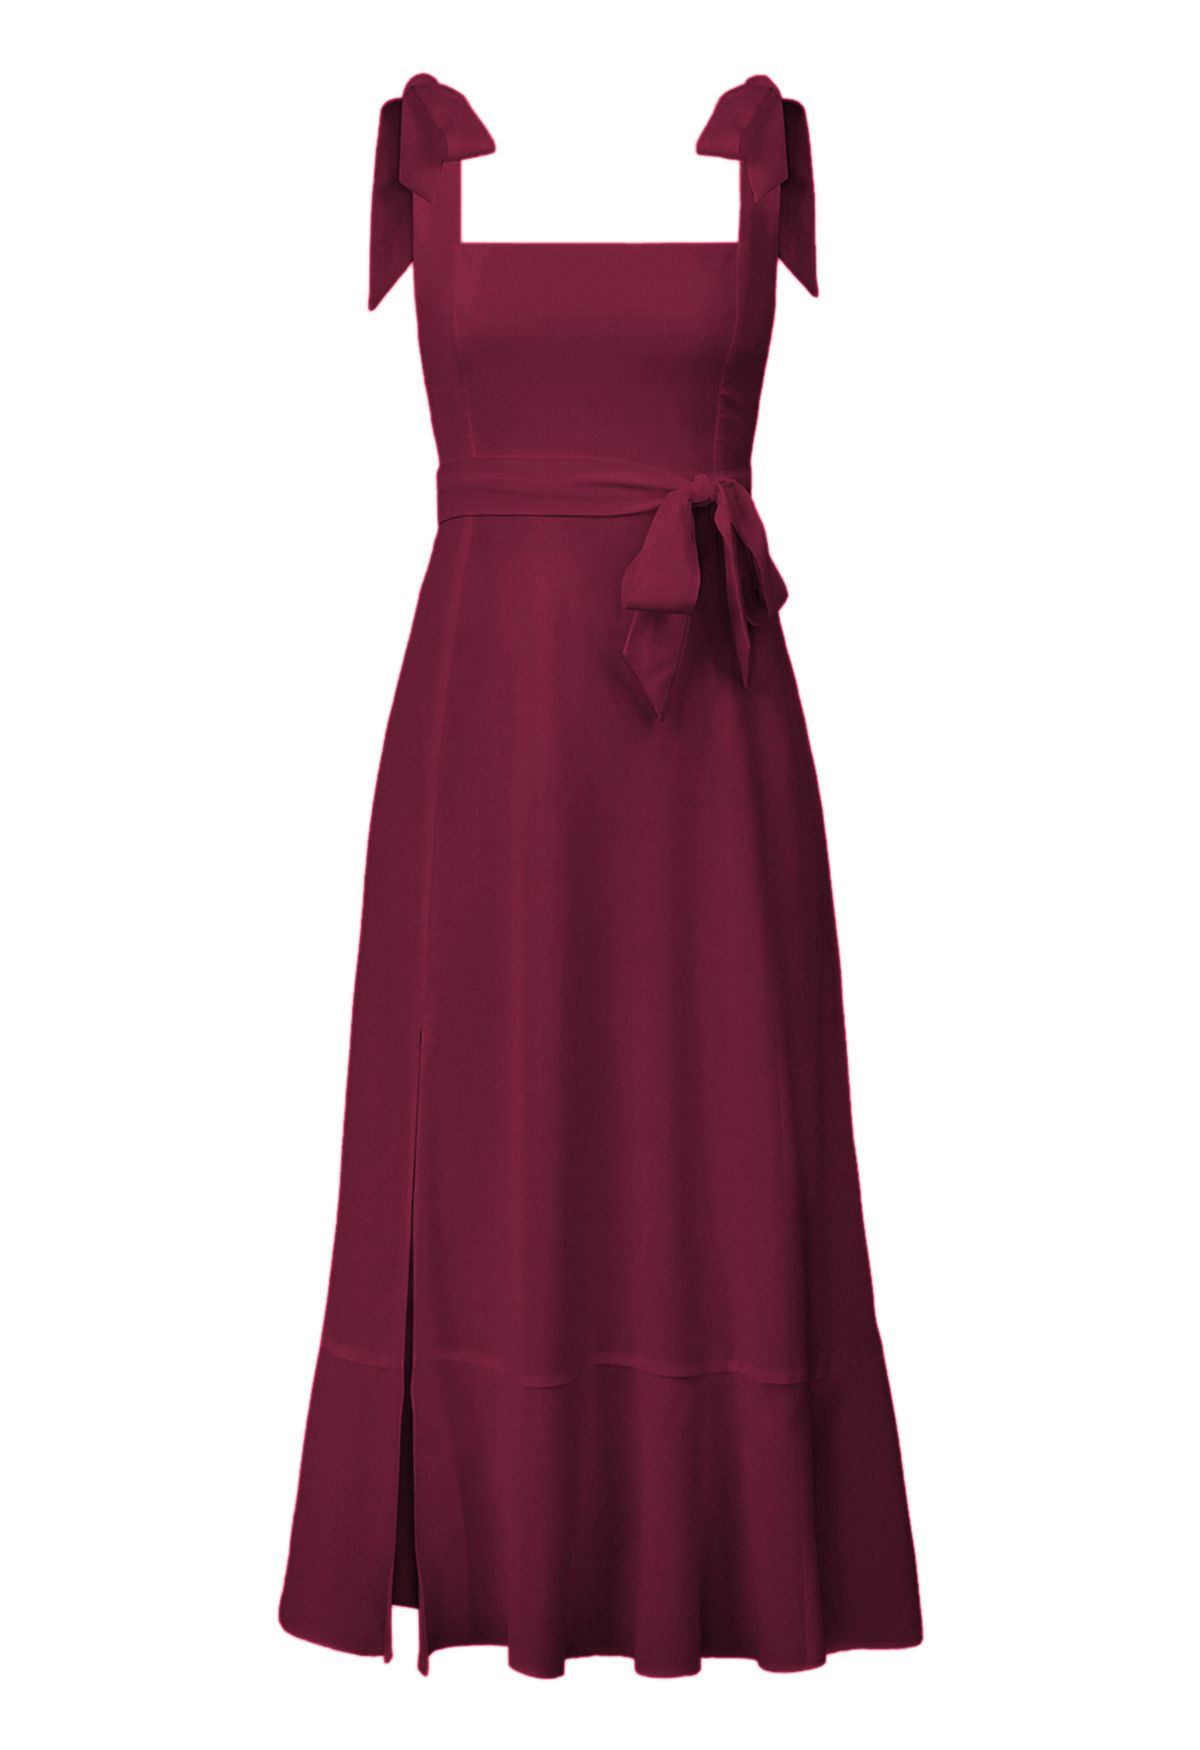 Ruffle Hem Tie-Shoulder Cami Dress in Burgundy